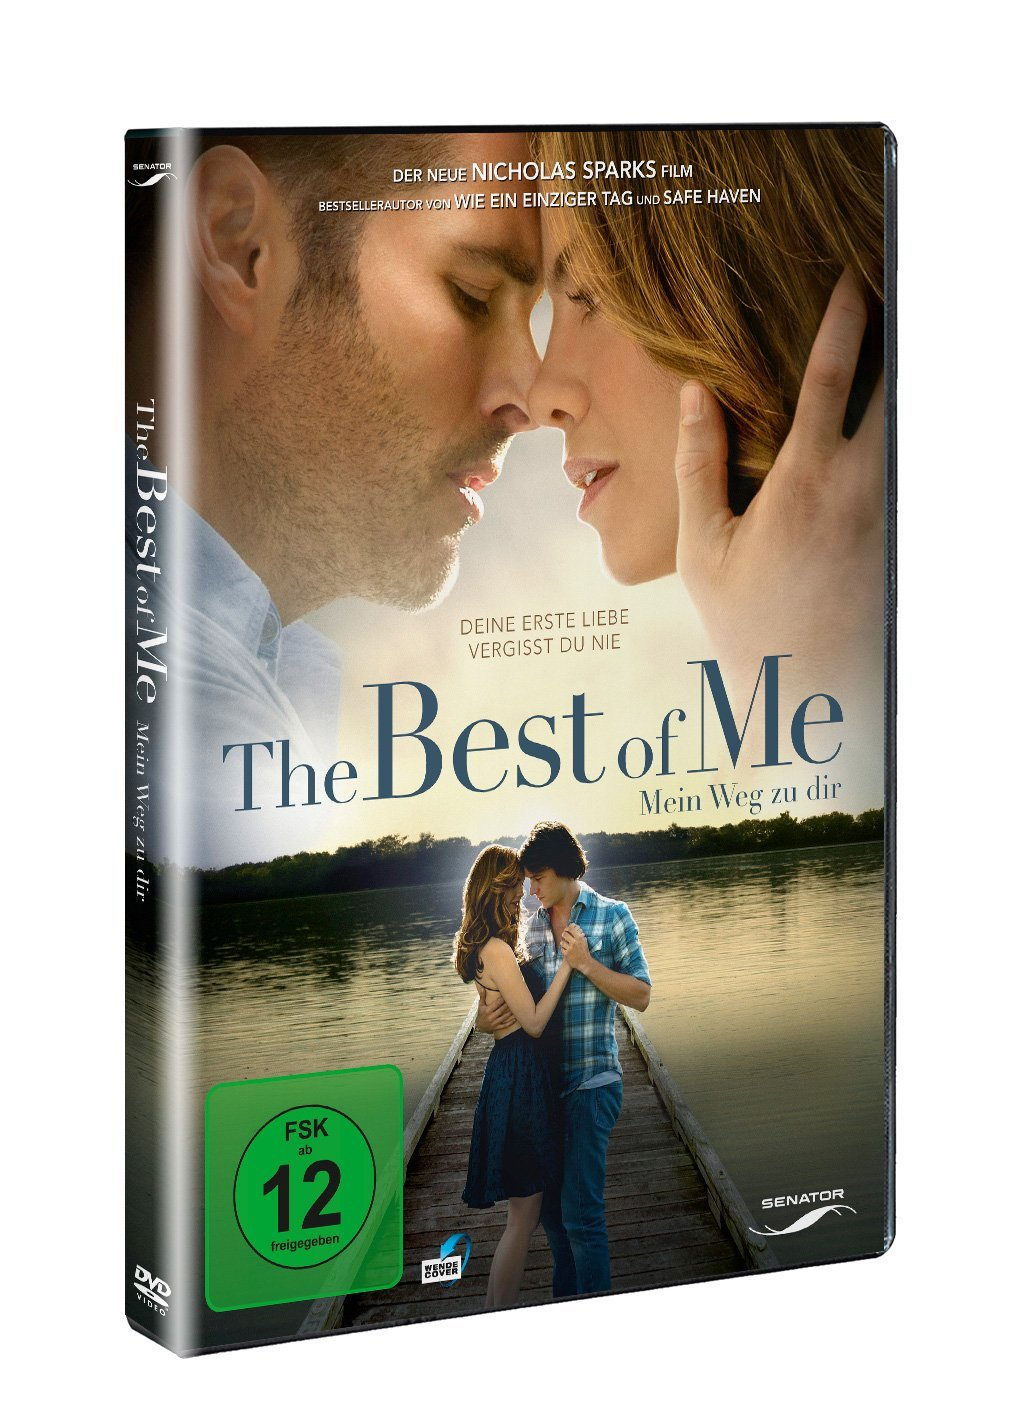 The Best of me Mein DVD dir - Weg zu